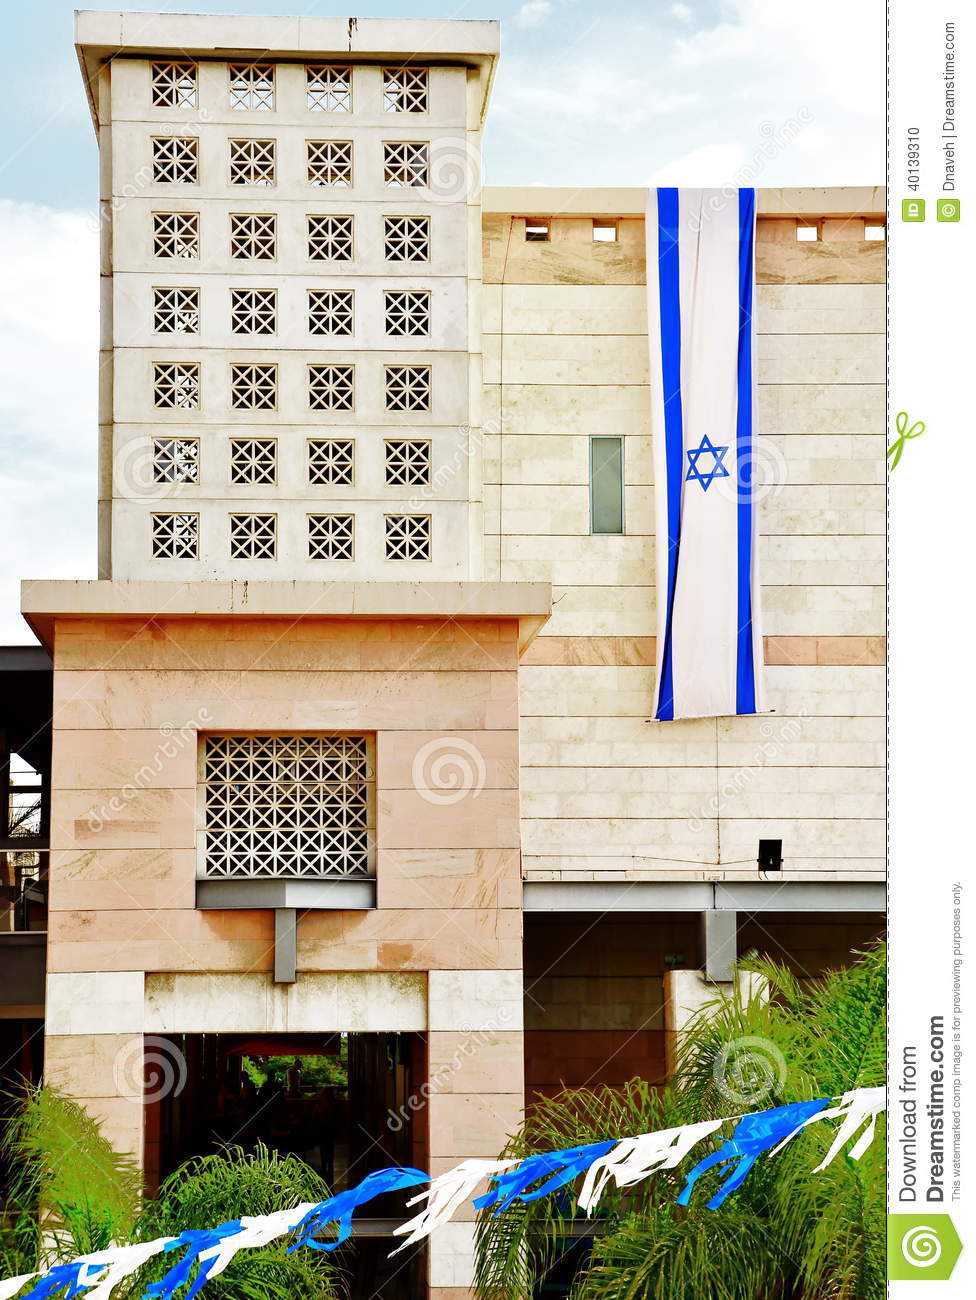 israel-flag-hanging-independence-day-white-blue-showing-star-david-vertically-modern-building-s-yom-40139310.jpg